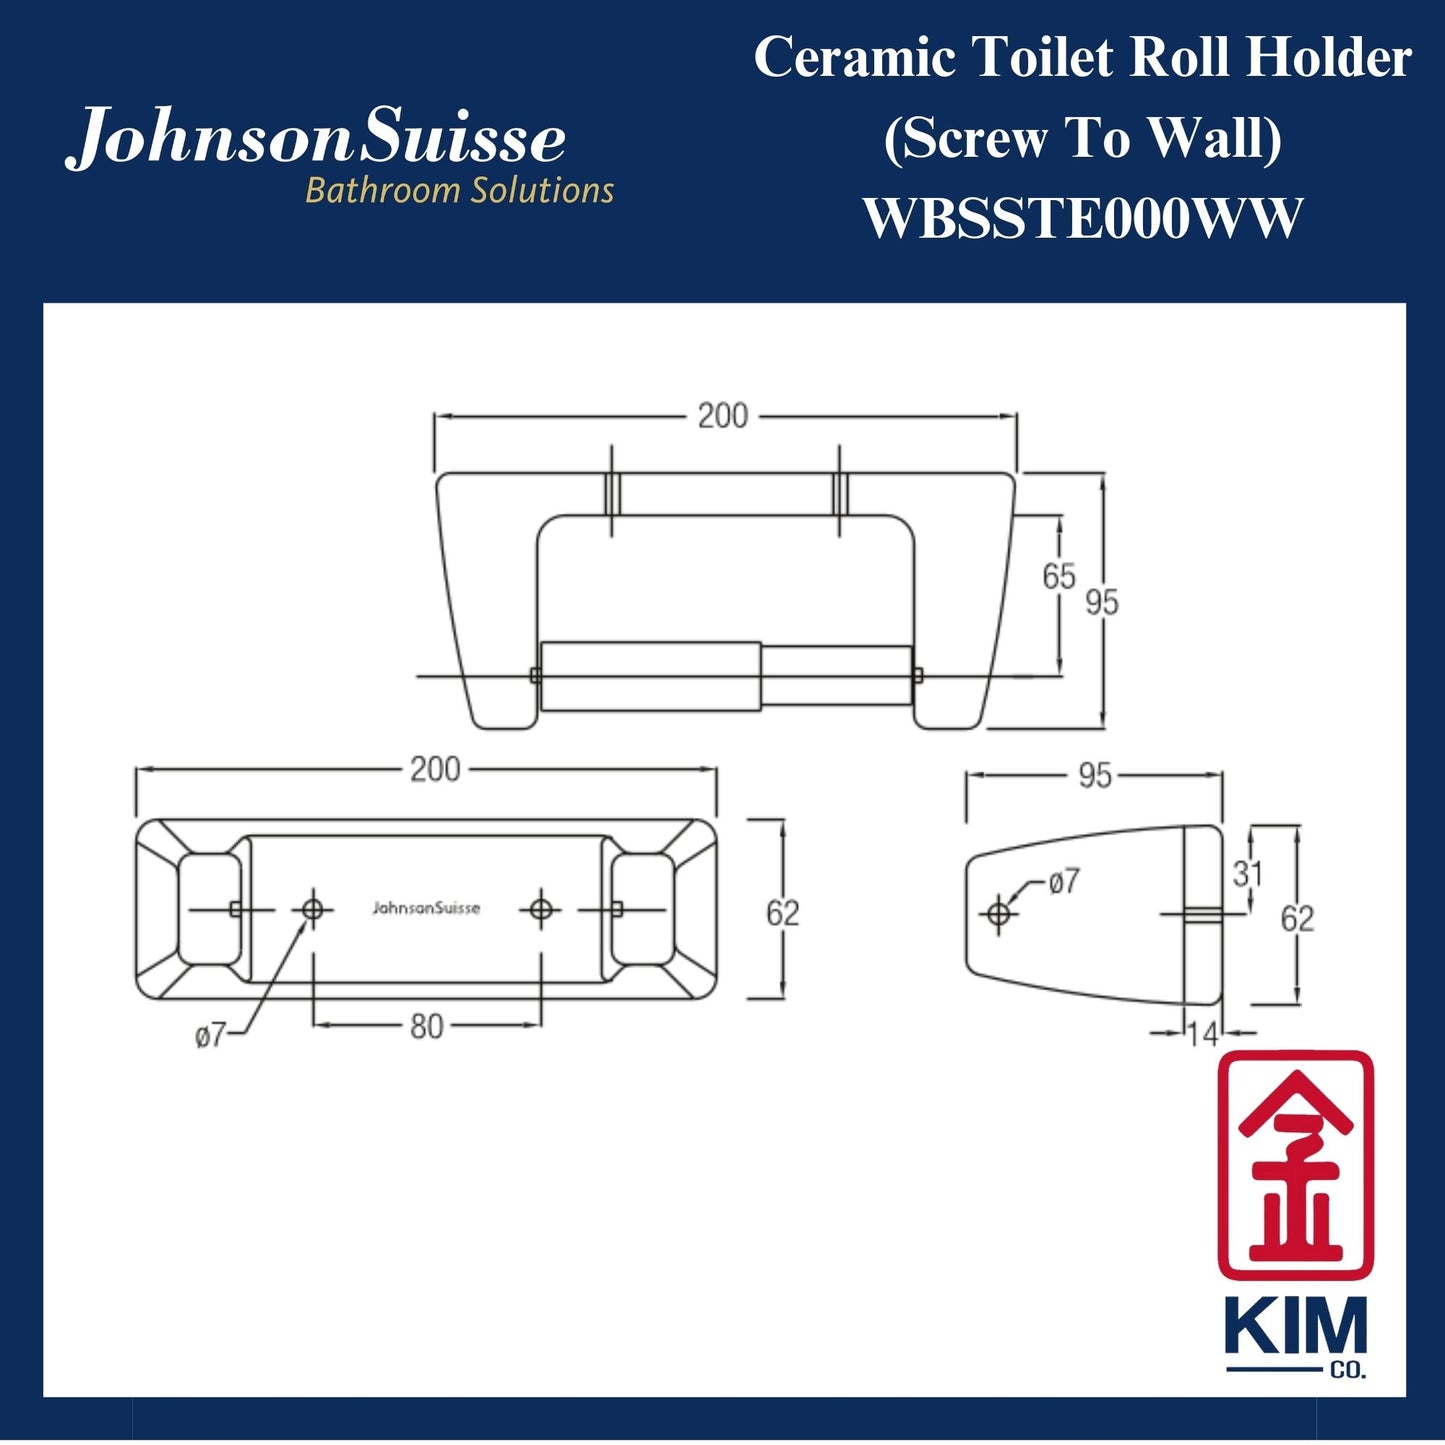 Johnson Suisse Ceramic Screw To Wall Toilet Roll Holder (WBSSTE000WW)